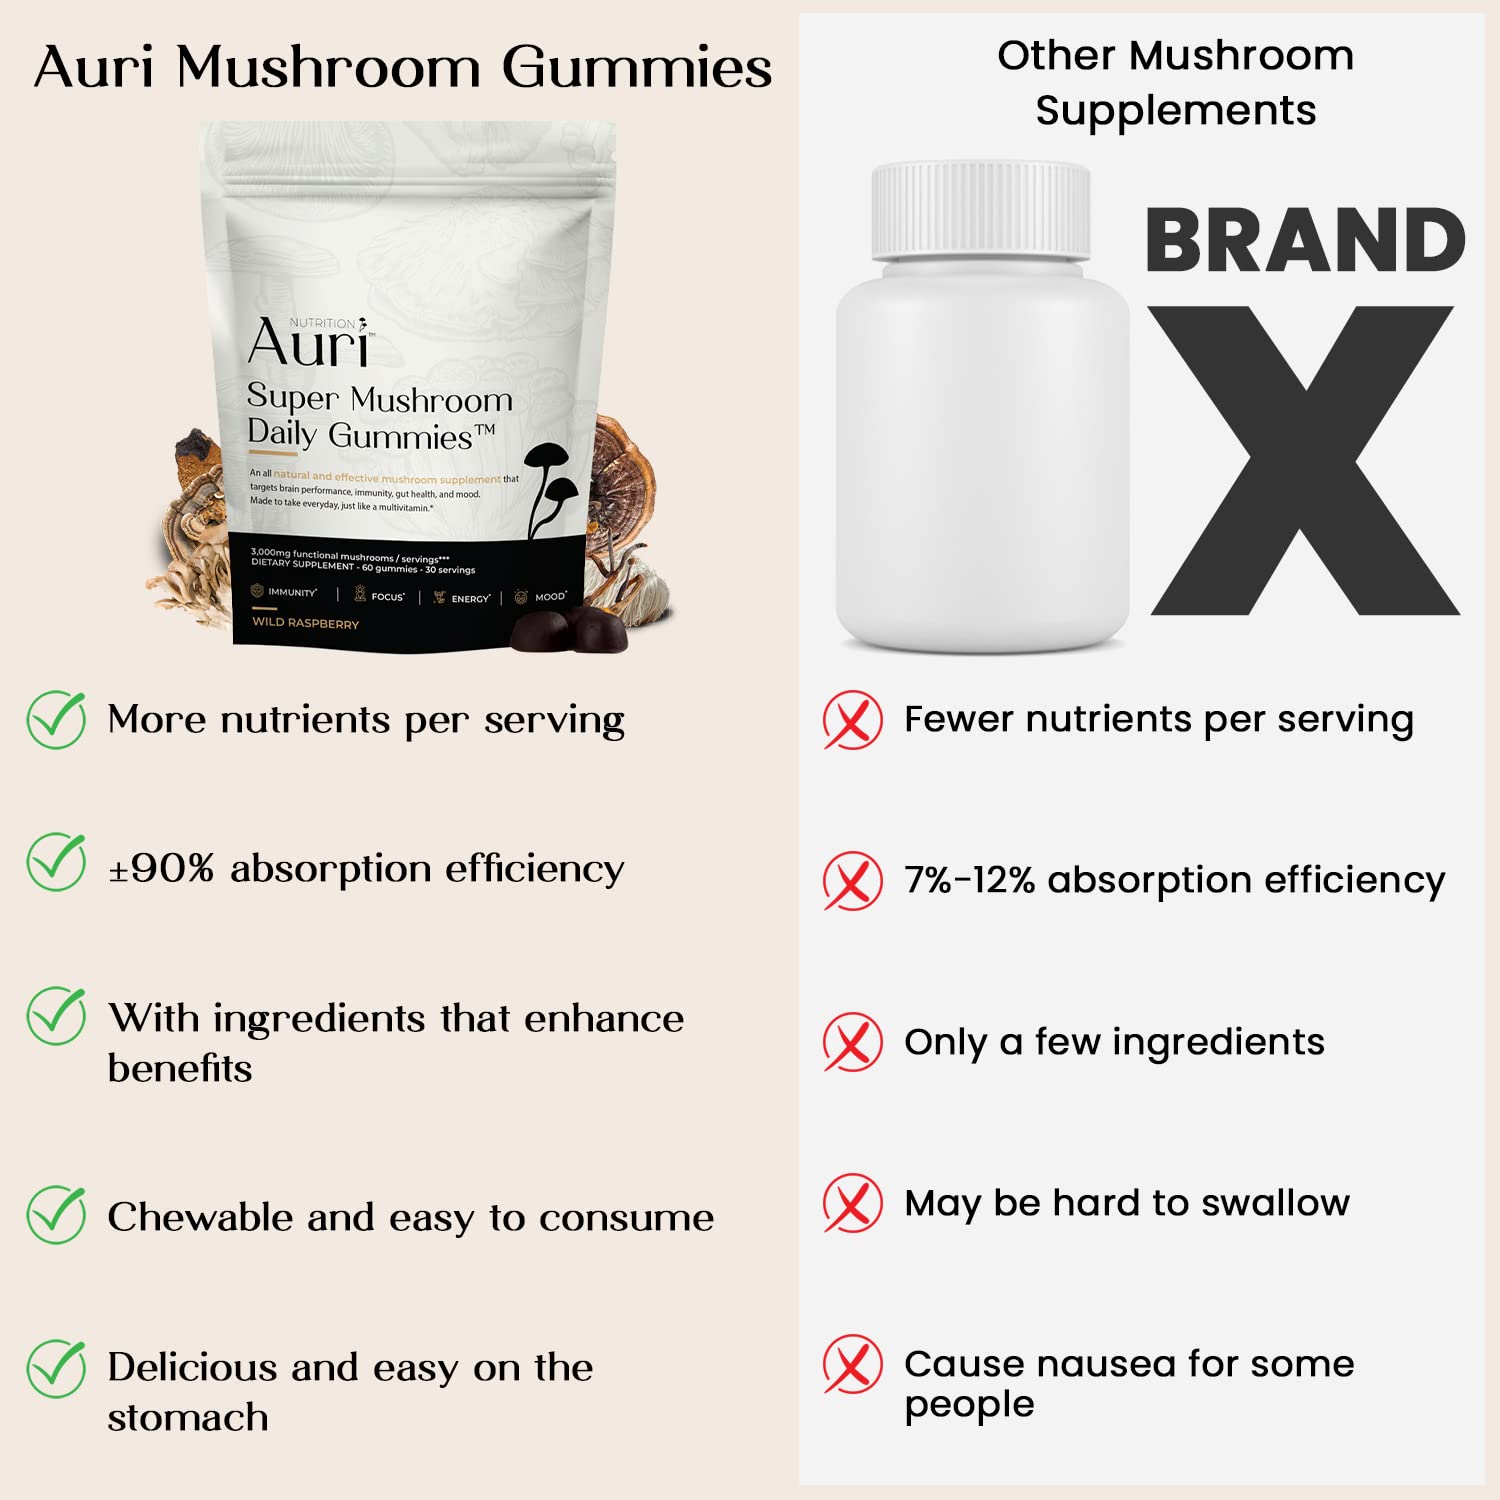 Auri Super Mushroom Daily Gummies - World's First Daily Mushroom Supplement Gummy - 12 Mushroom Blend with Chaga, Lions Mane, Reishi, Cordyceps - Boost Your Immunity, Focus, Energy, Mood - 60 Gummies